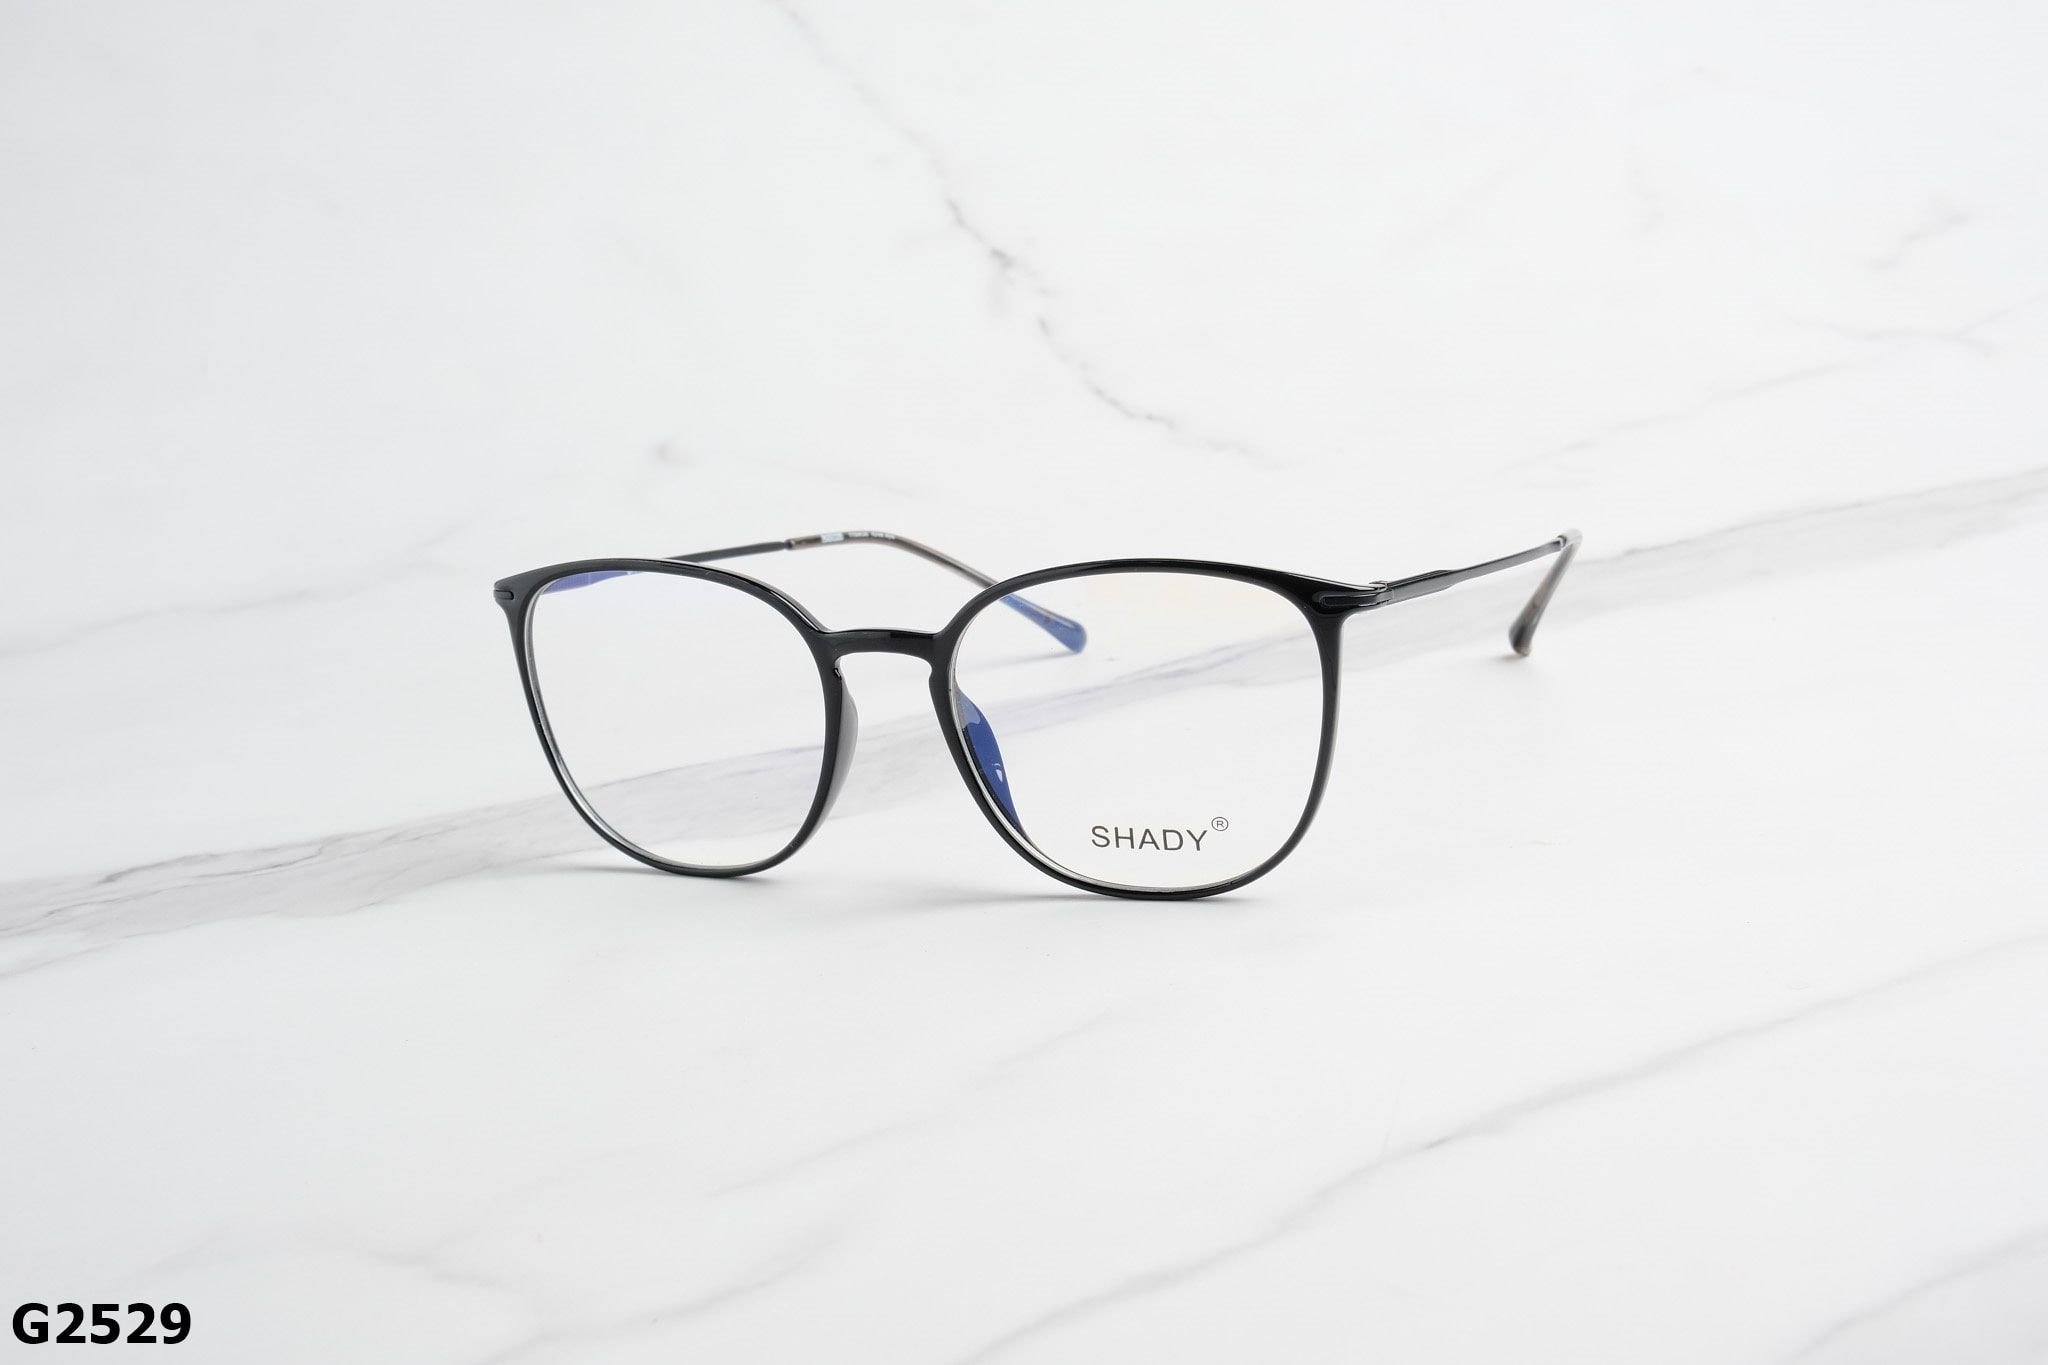  SHADY Eyewear - Glasses - G2529 